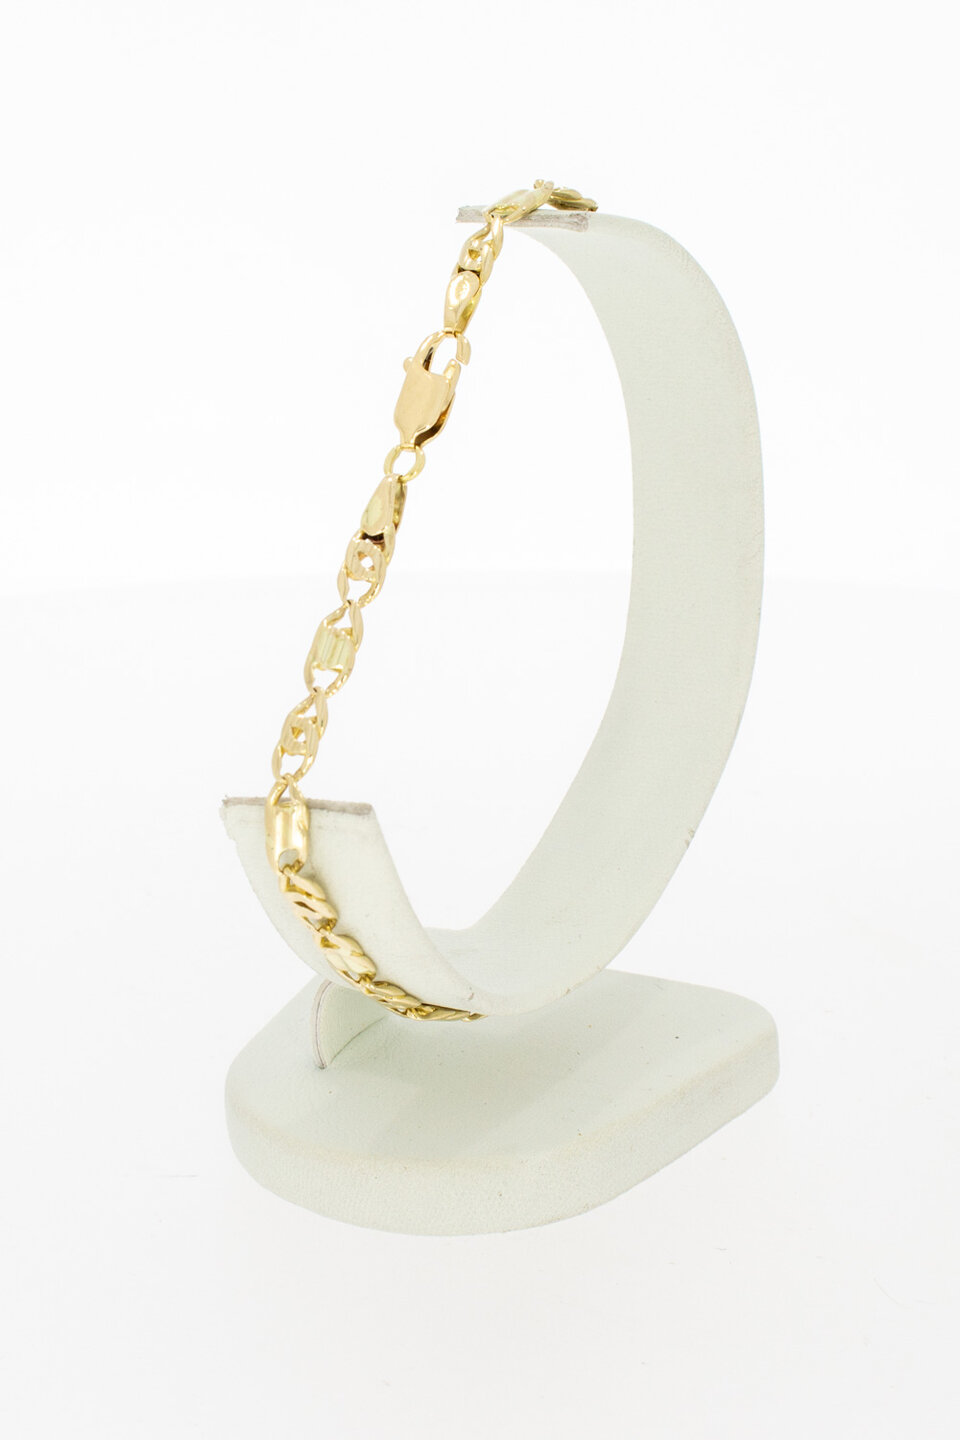 14 karaat gouden Valkoog armband - 21,5 cm